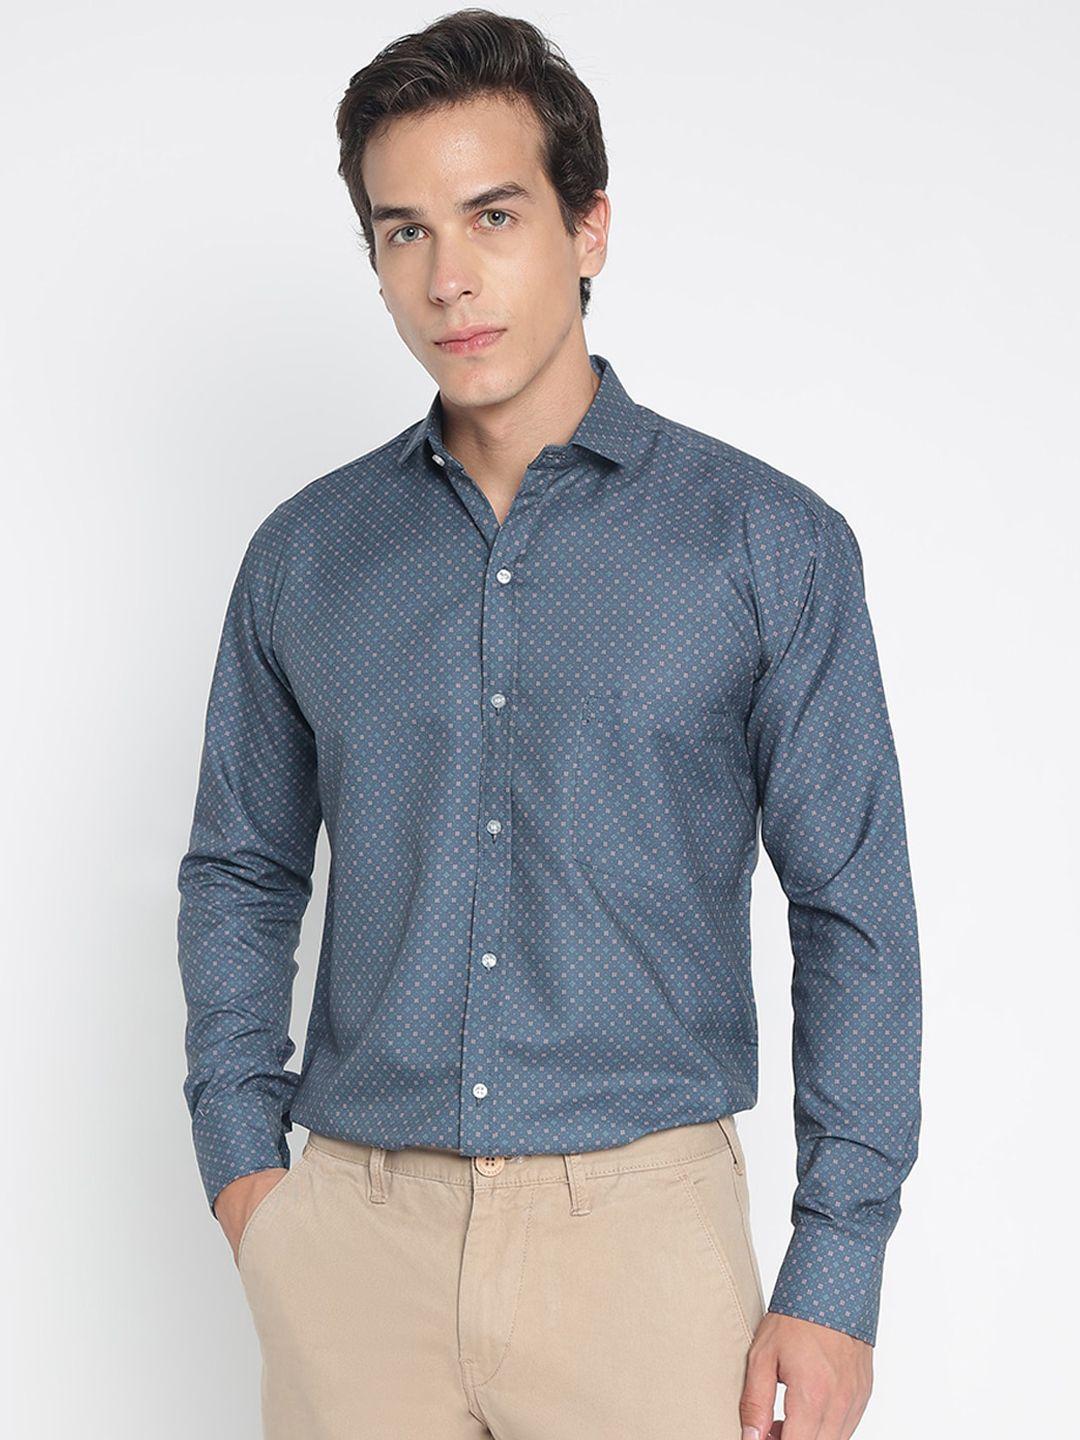 colorwings comfort slim fit geometric printed spread collar casual shirt